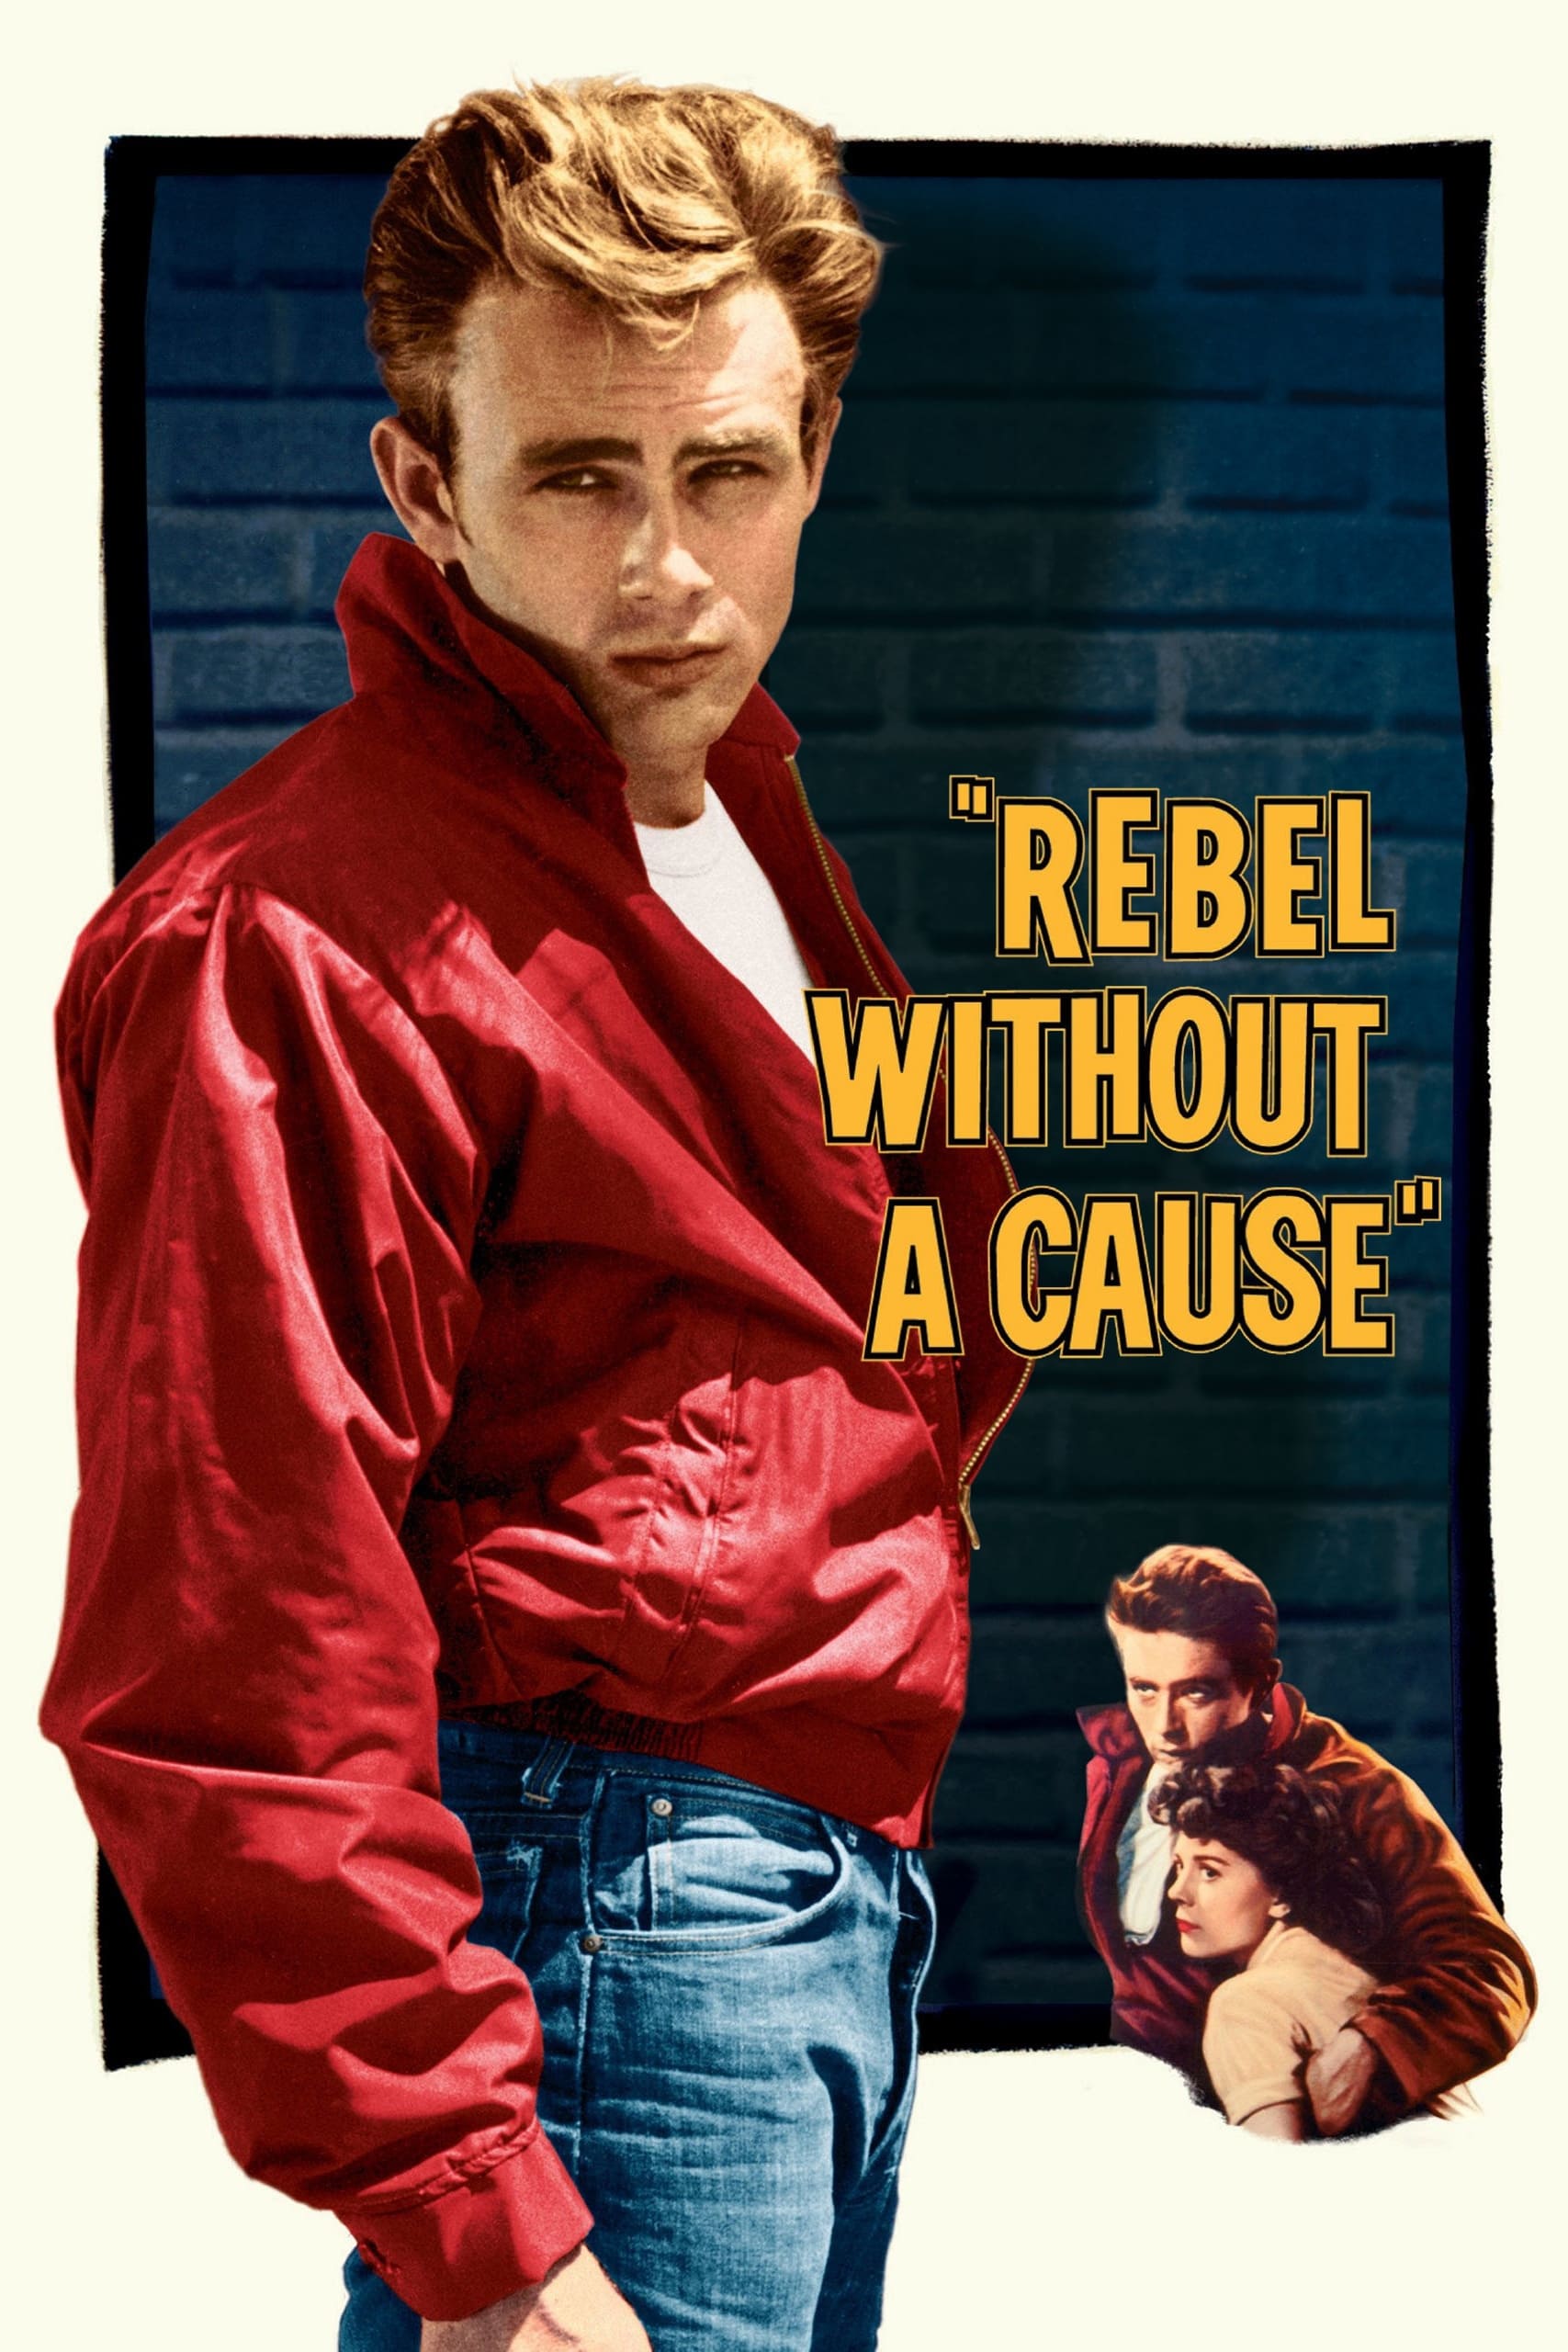 Rebelde sin causa (1955)